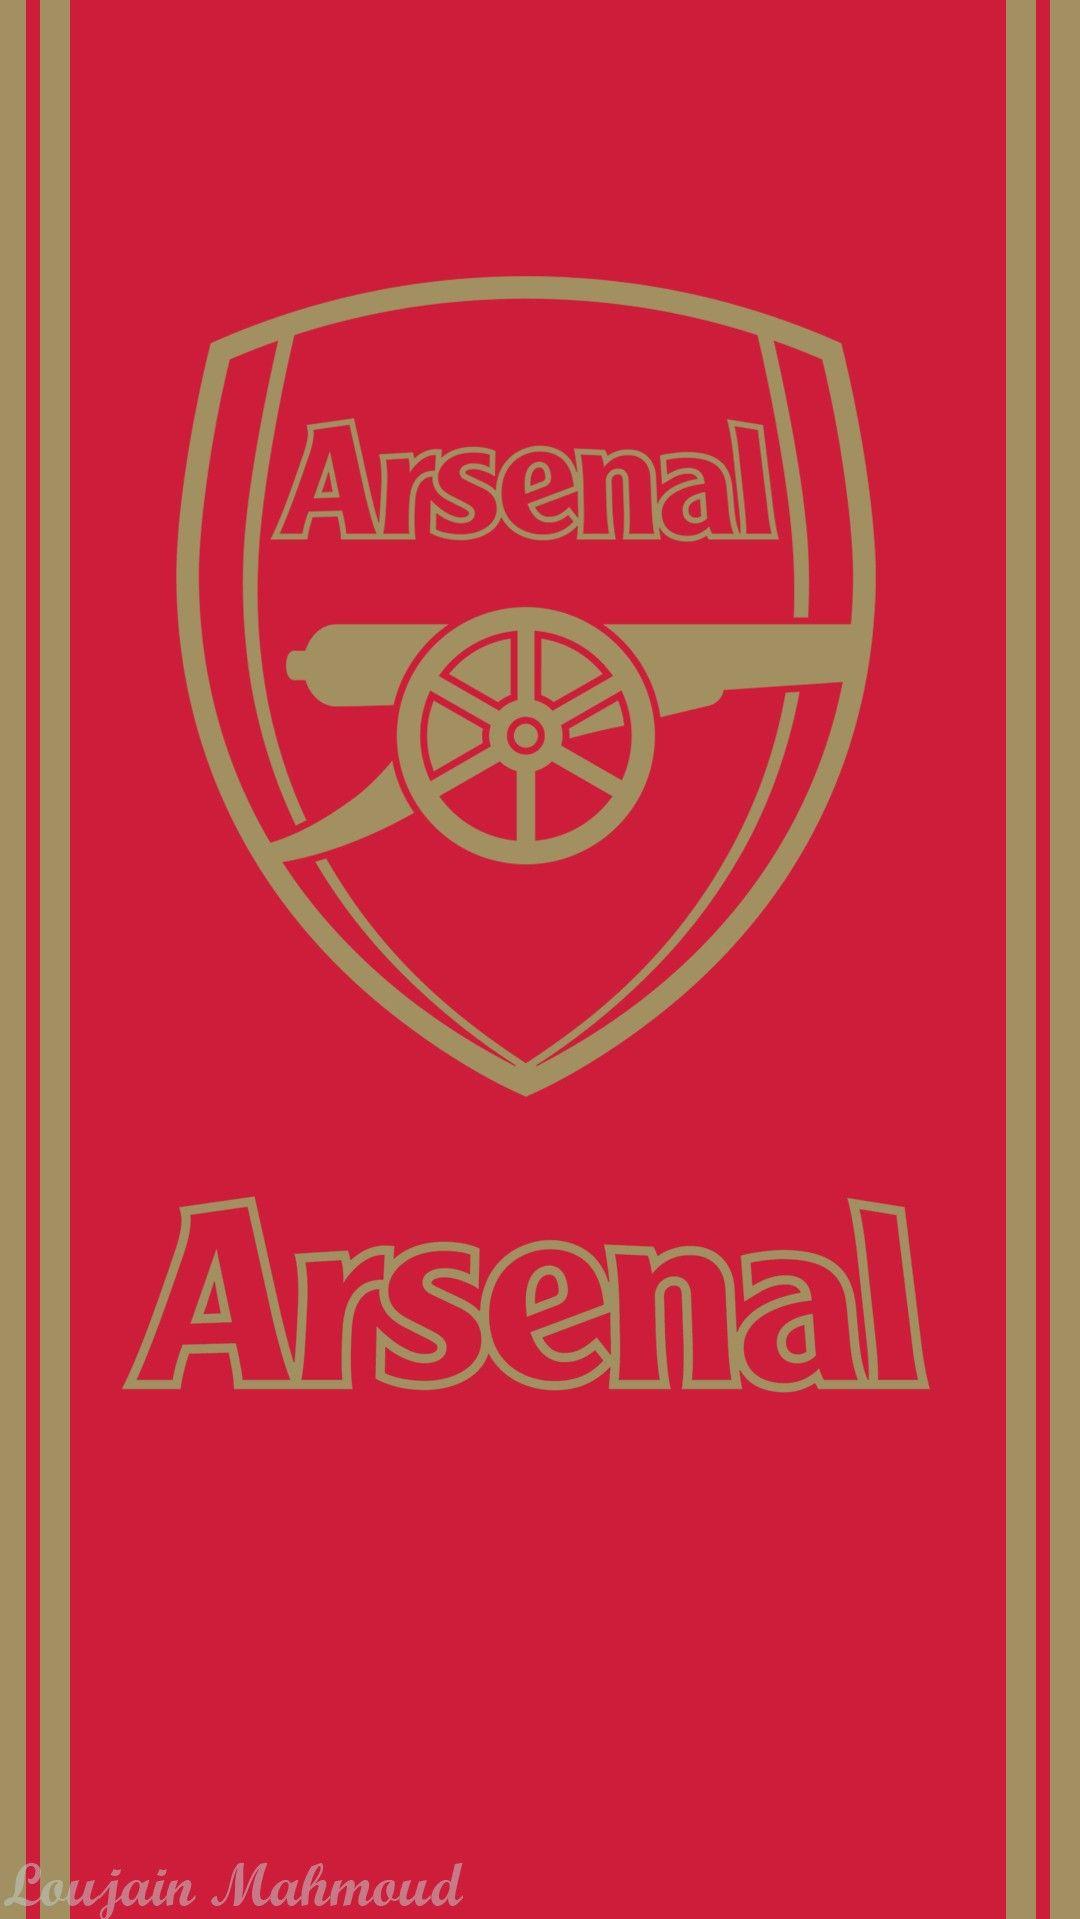 Arsenal mobile Wallpaper in Arsenal wallpapers